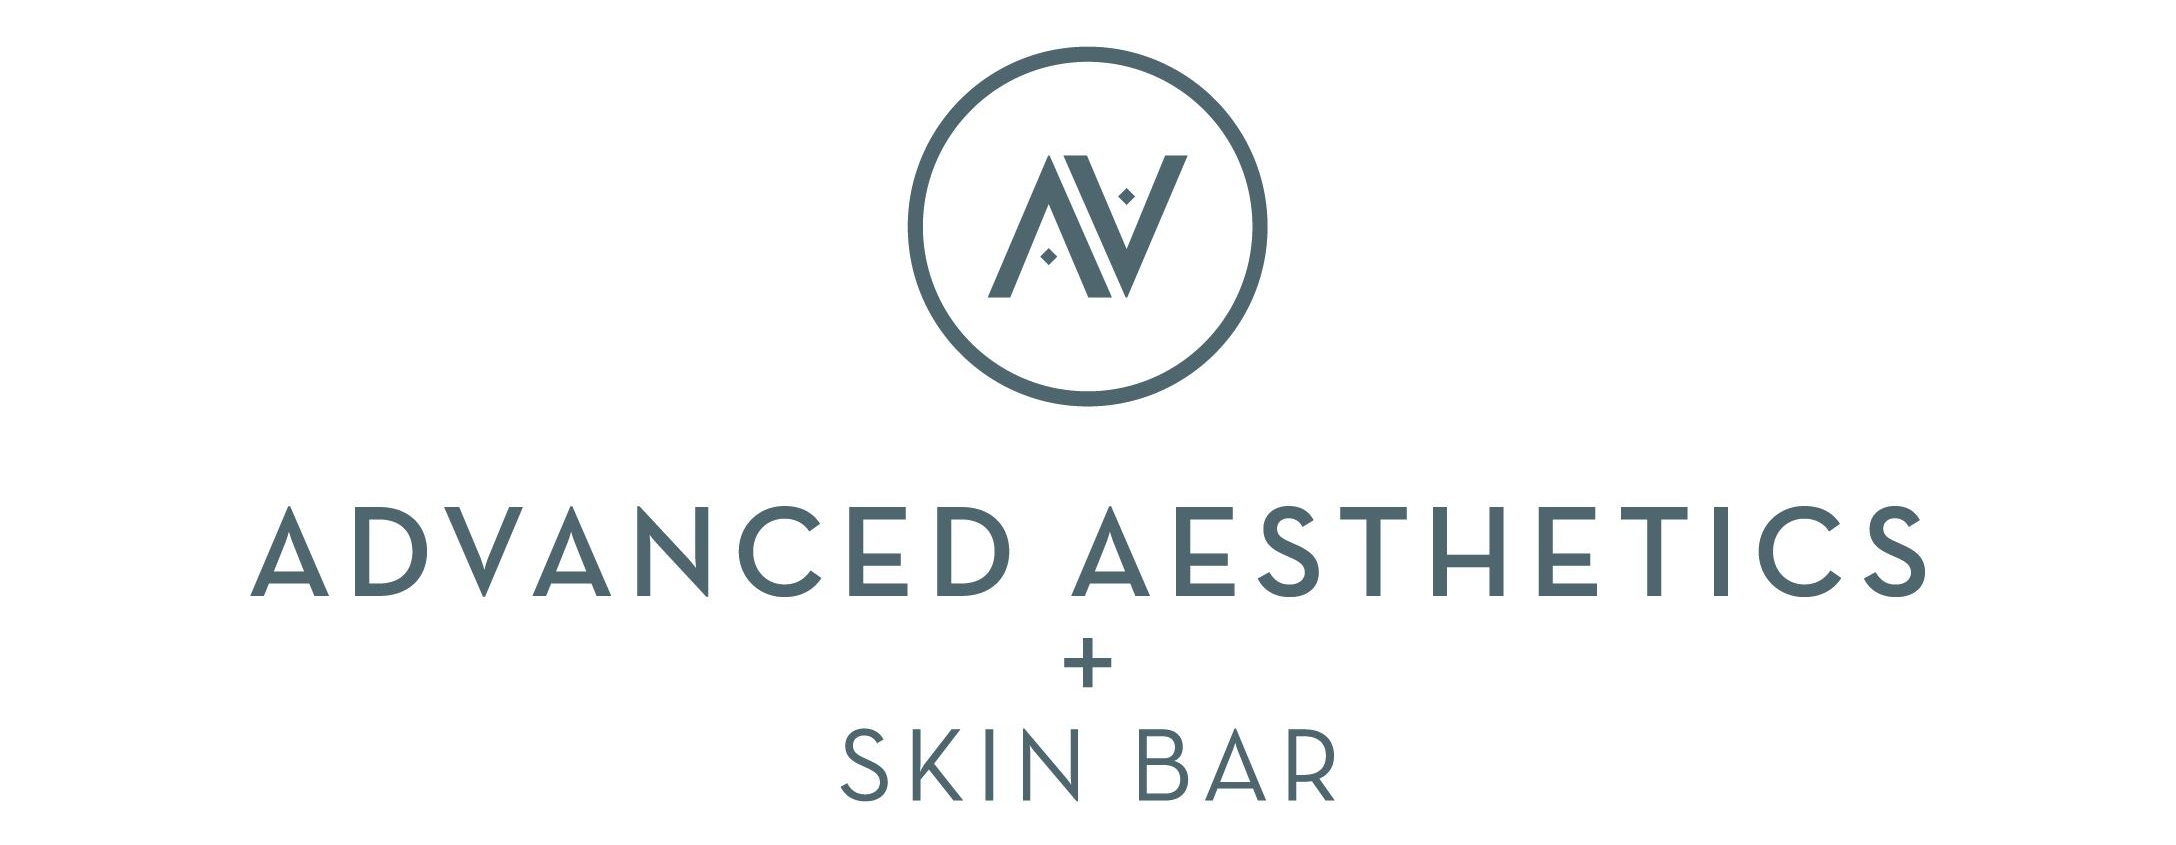 Advanced Aesthetics + Skin Bar